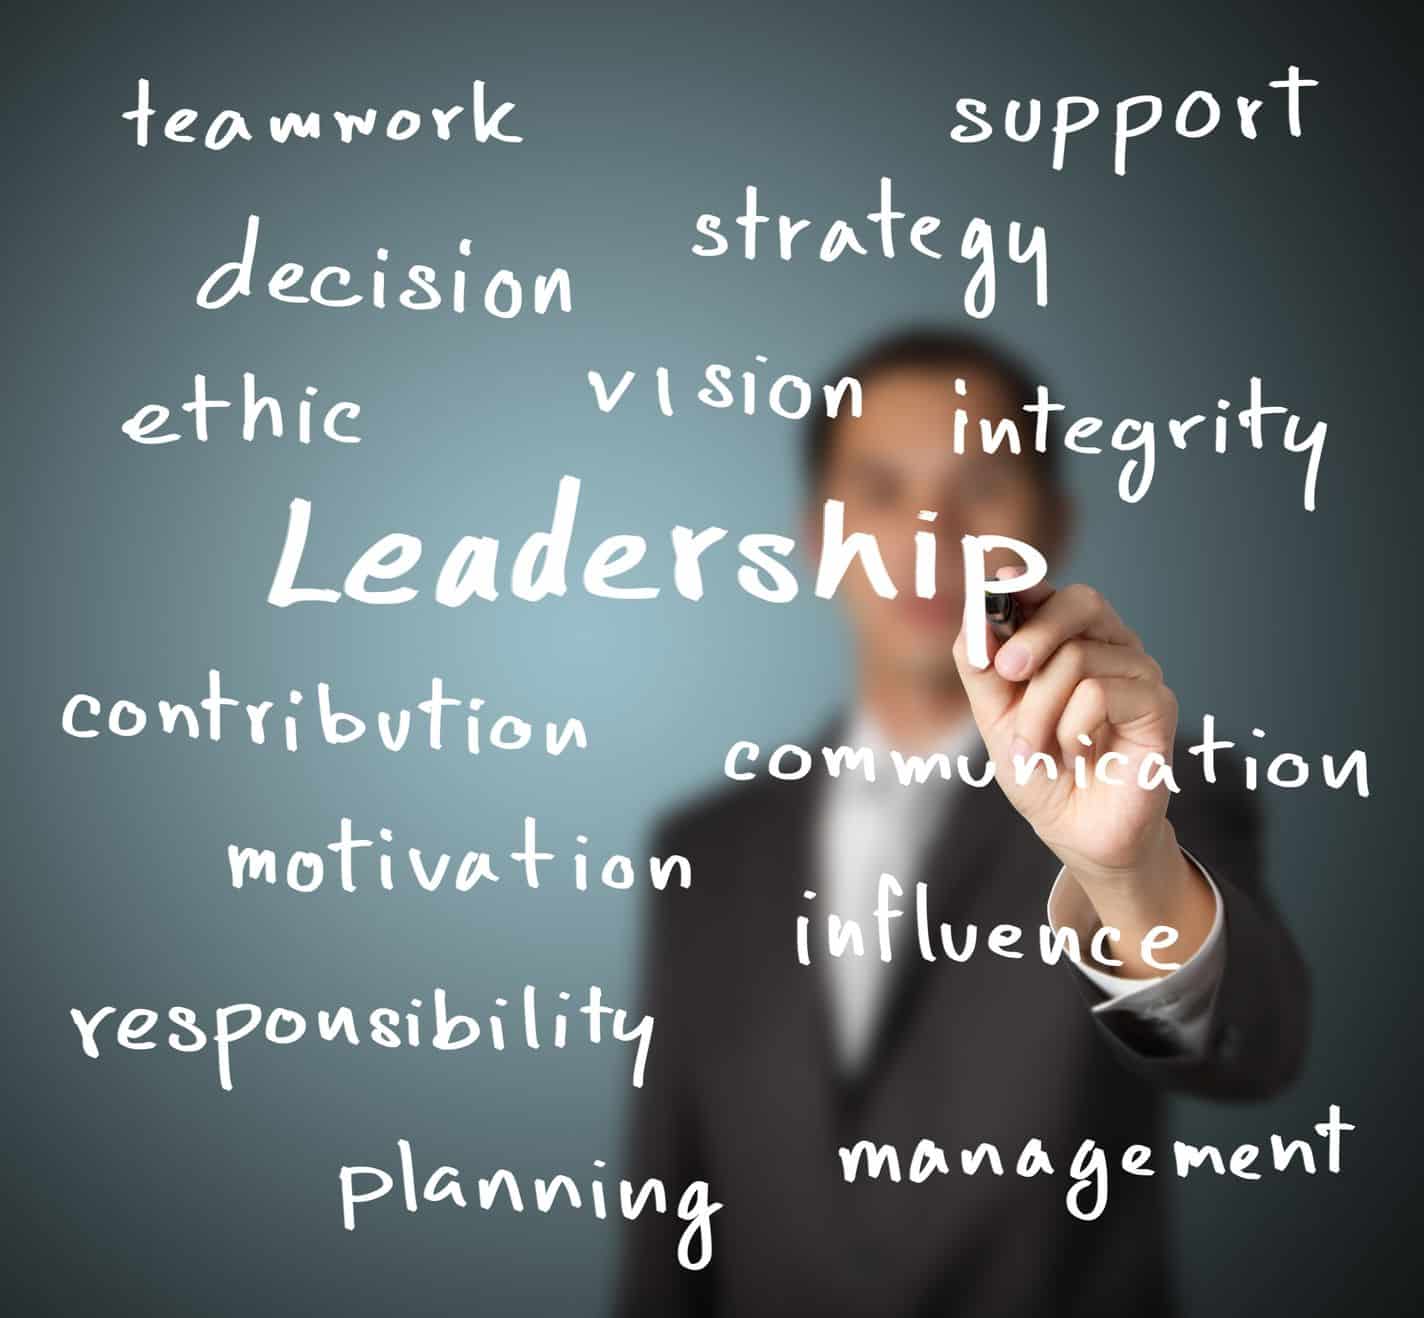 Leadership management